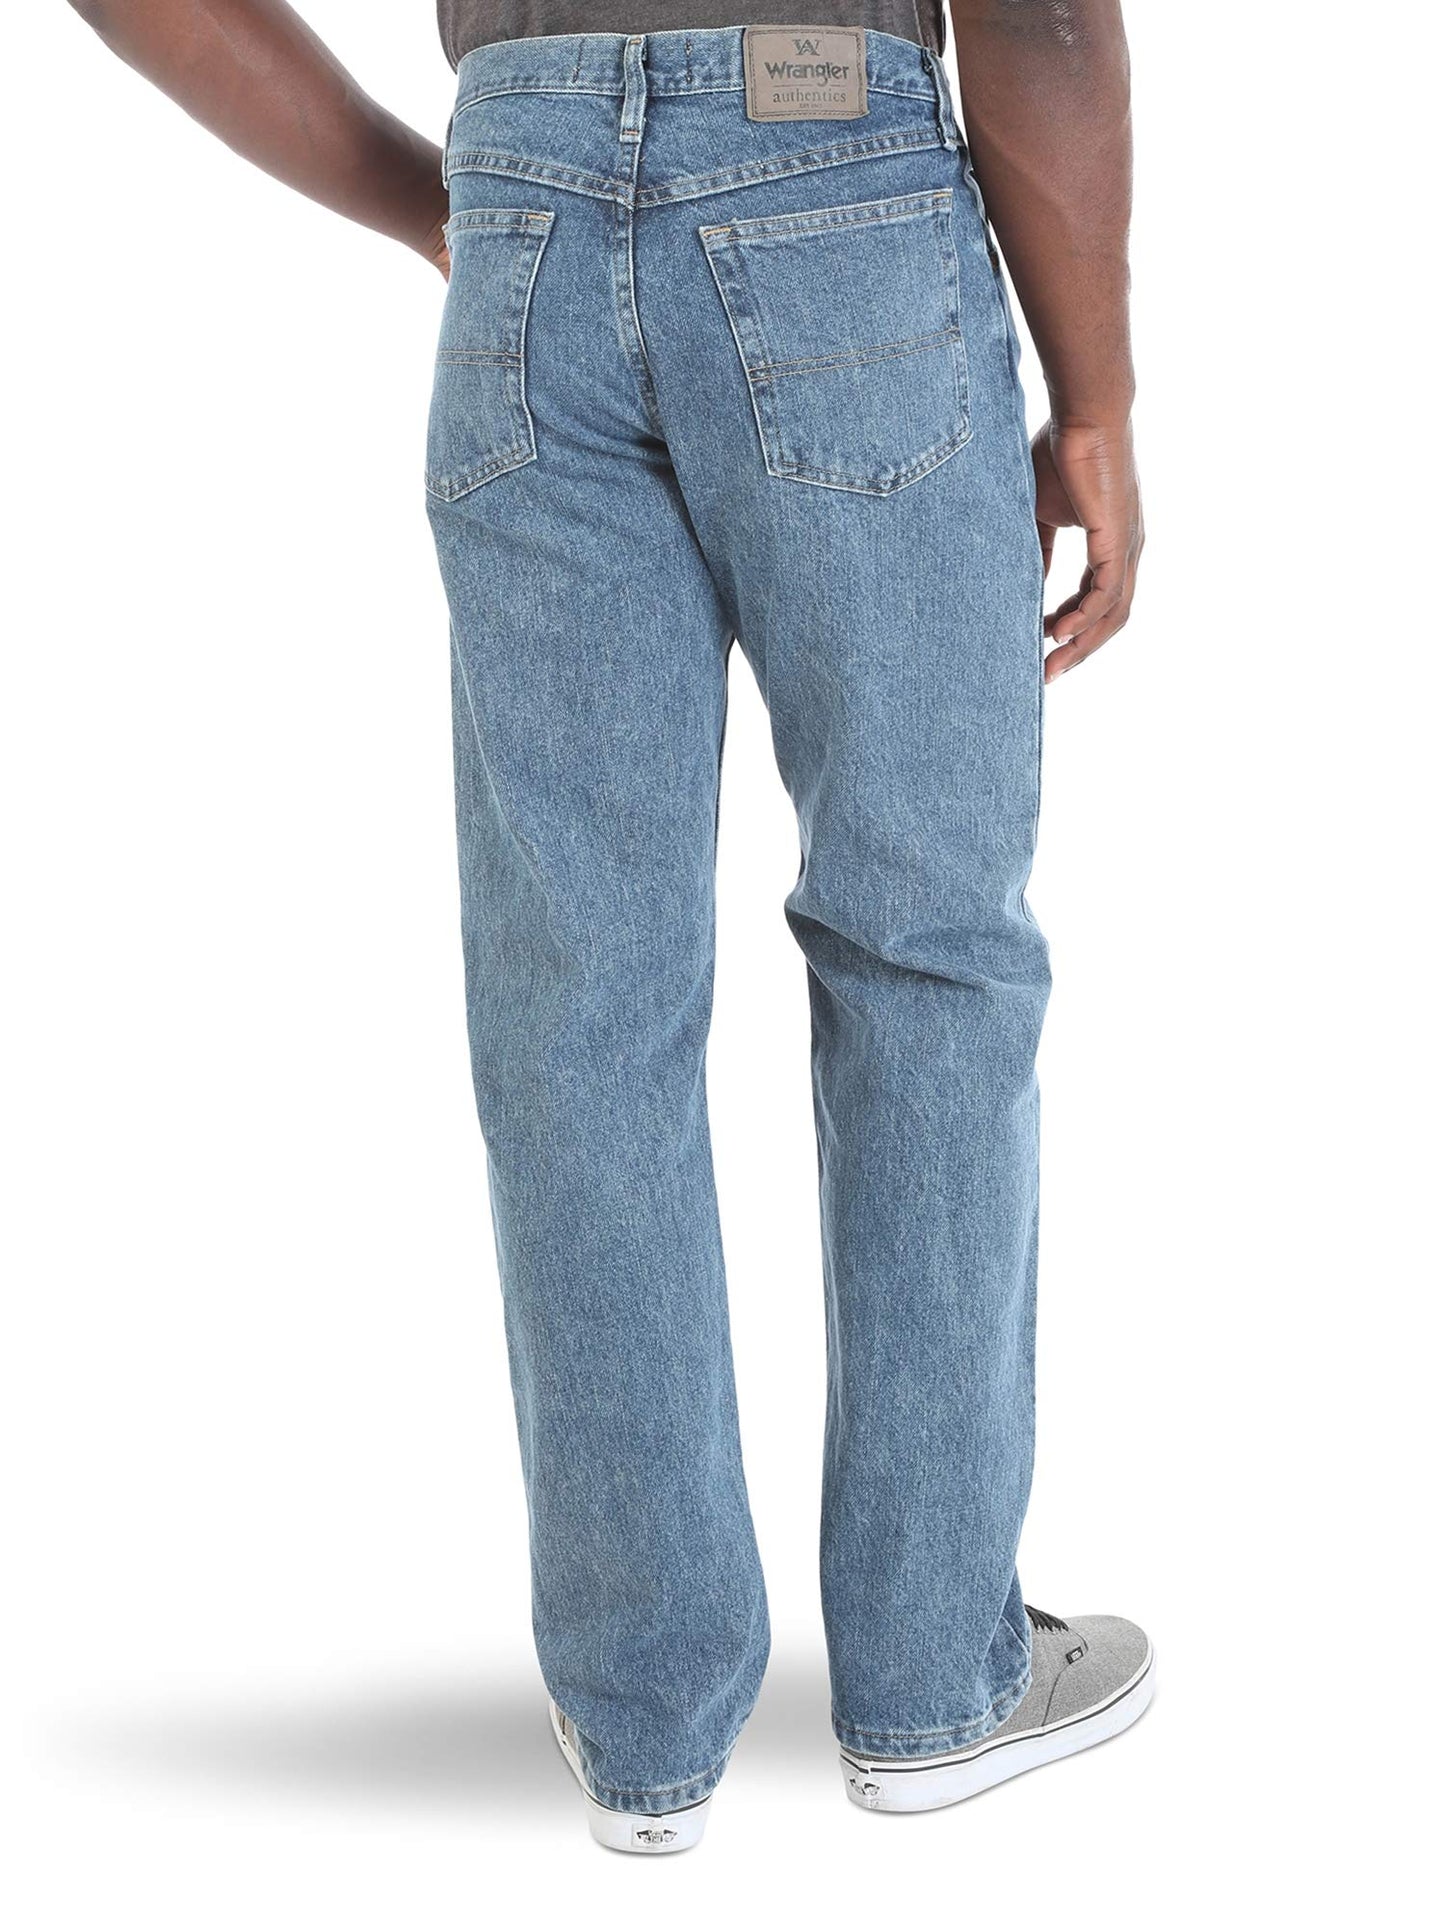 Wrangler Authentics Men's Big & Tall Classic 5-Pocket Relaxed Fit Cotton Jean, Vintage Stonewash, 44W X 28L